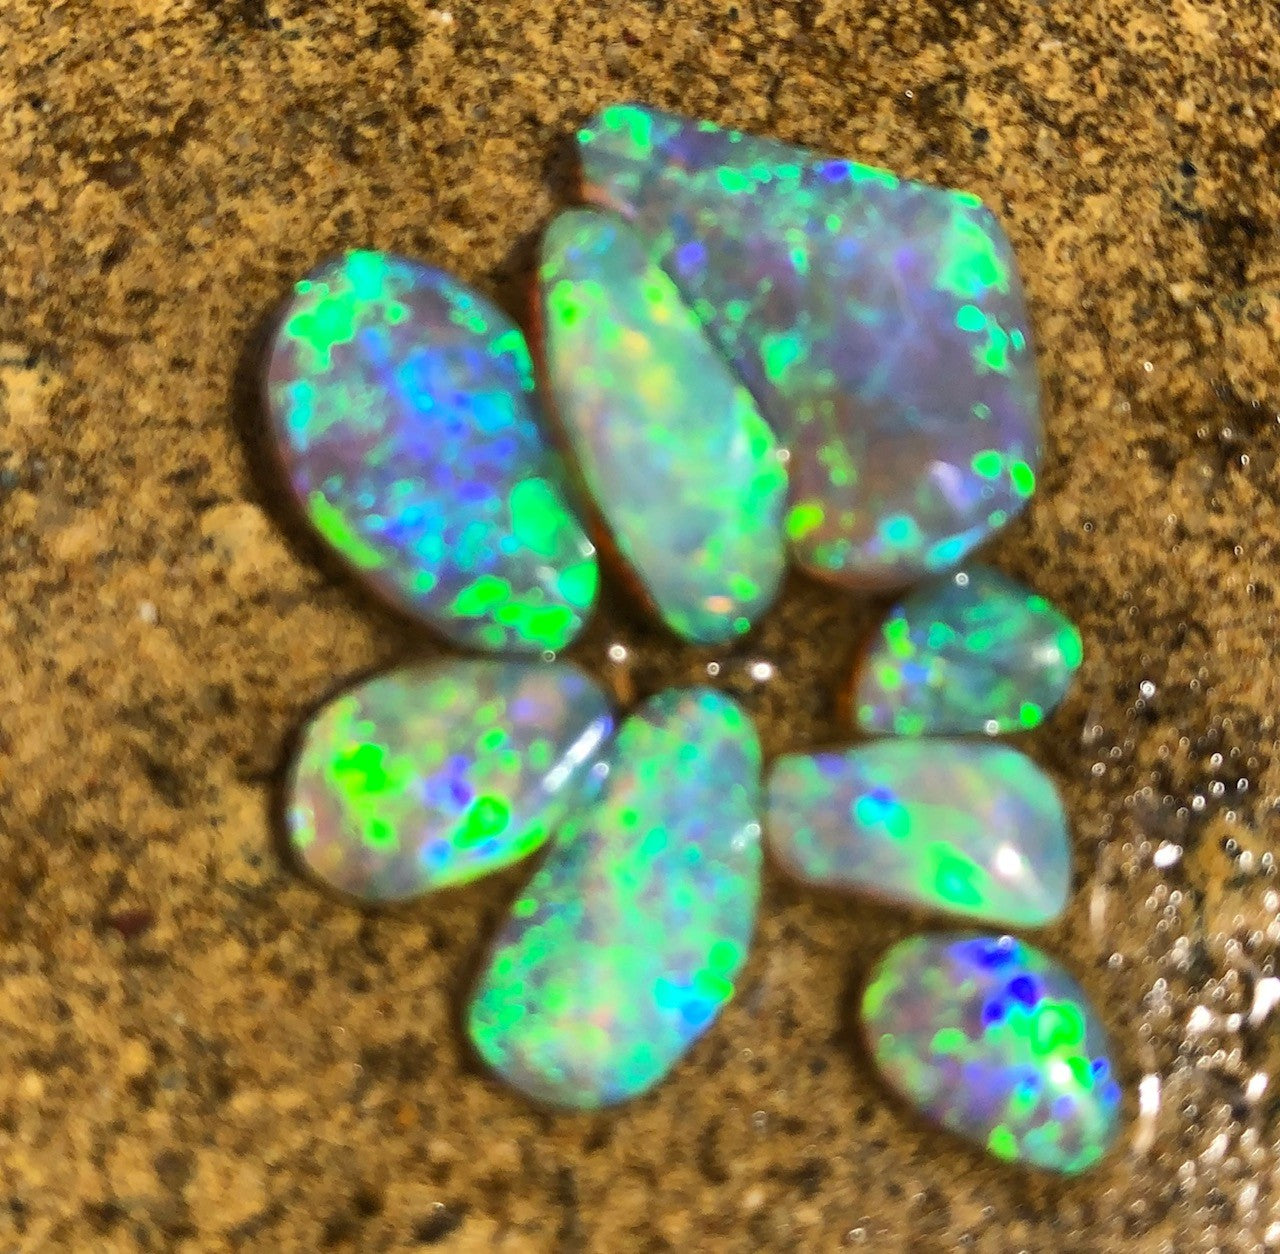 Bright green crystal opal rubs